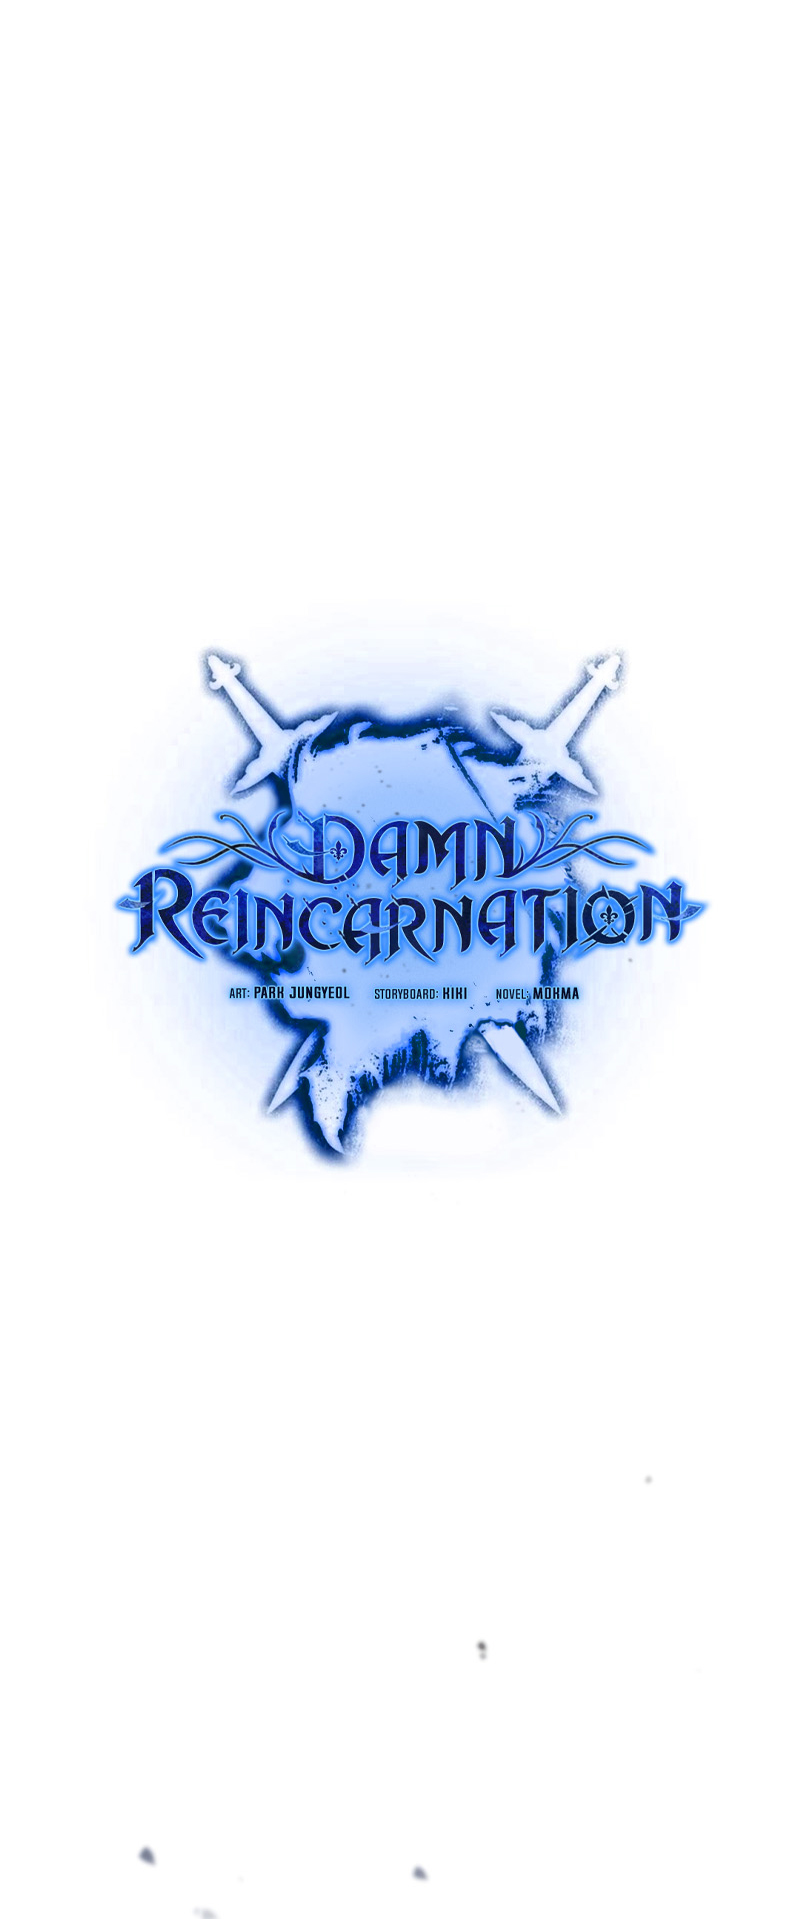 Damn Reincarnation25